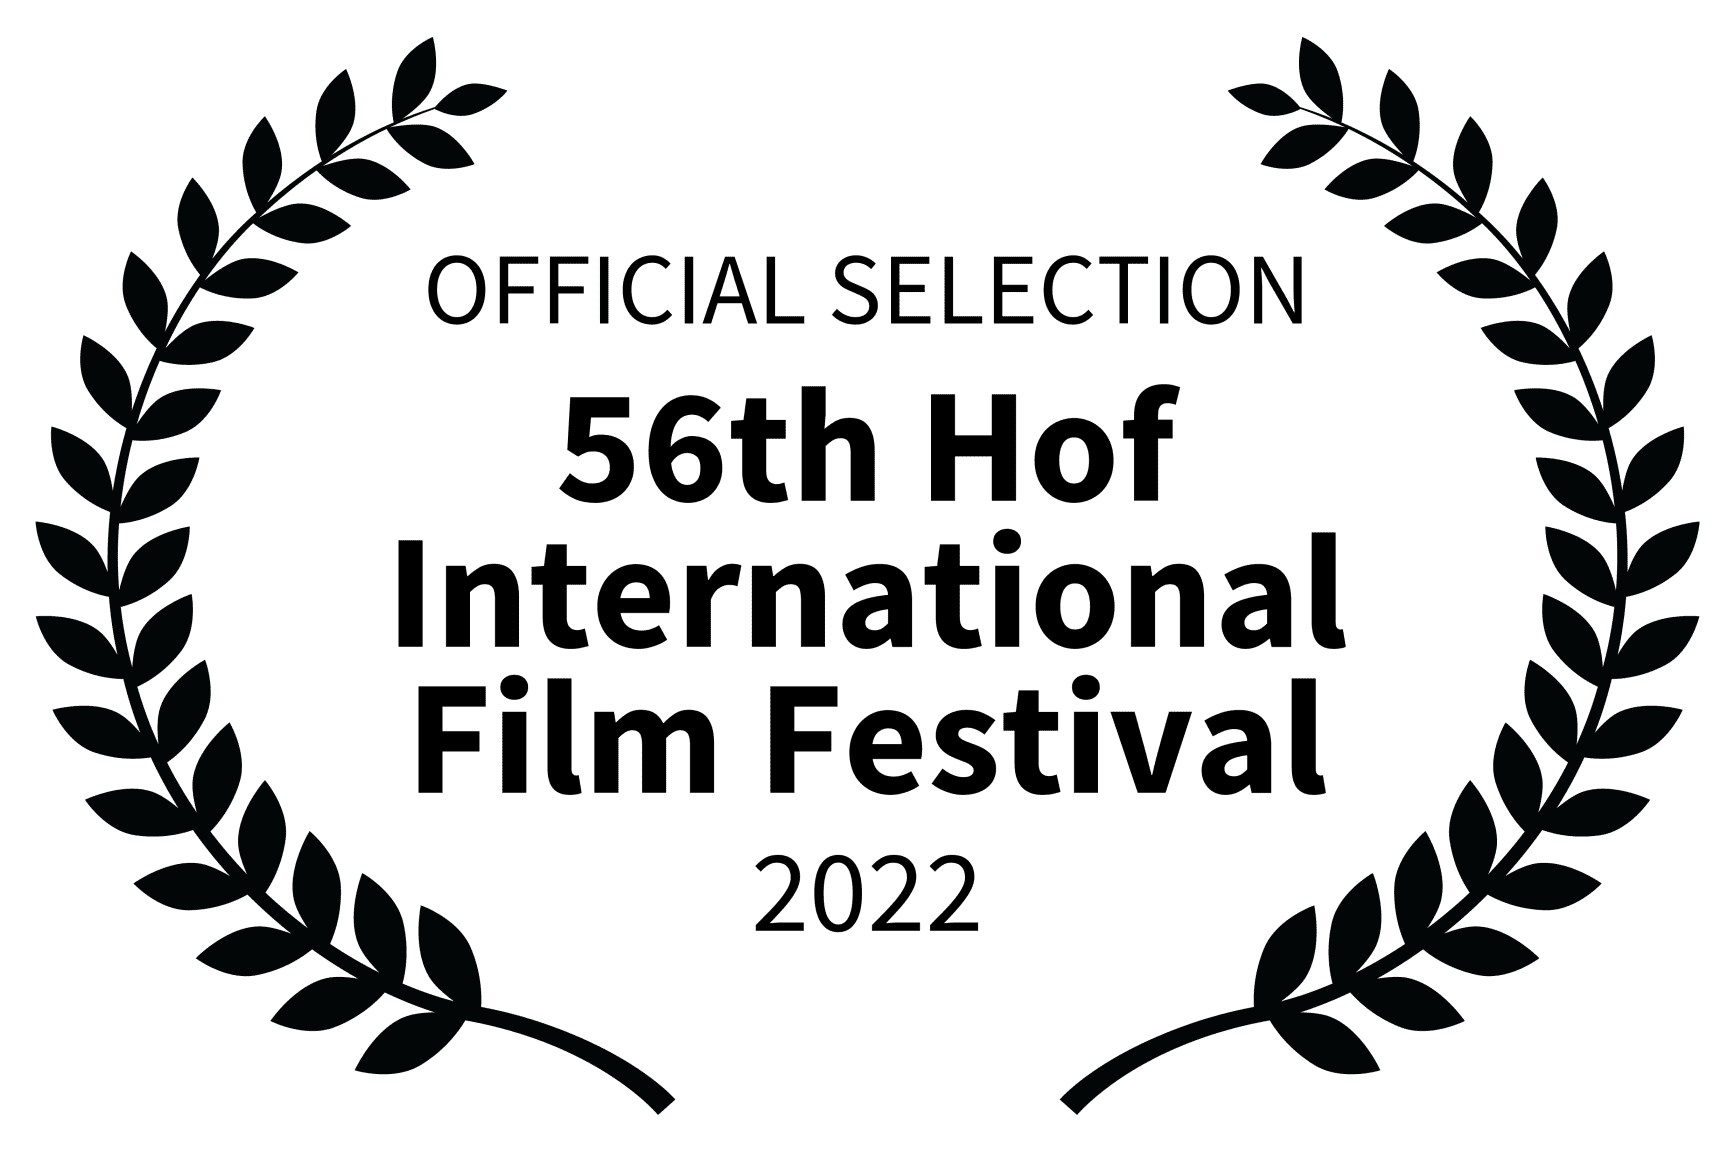 OFFICIAL SELECTION - 56th Hof International Film Festival - 2022